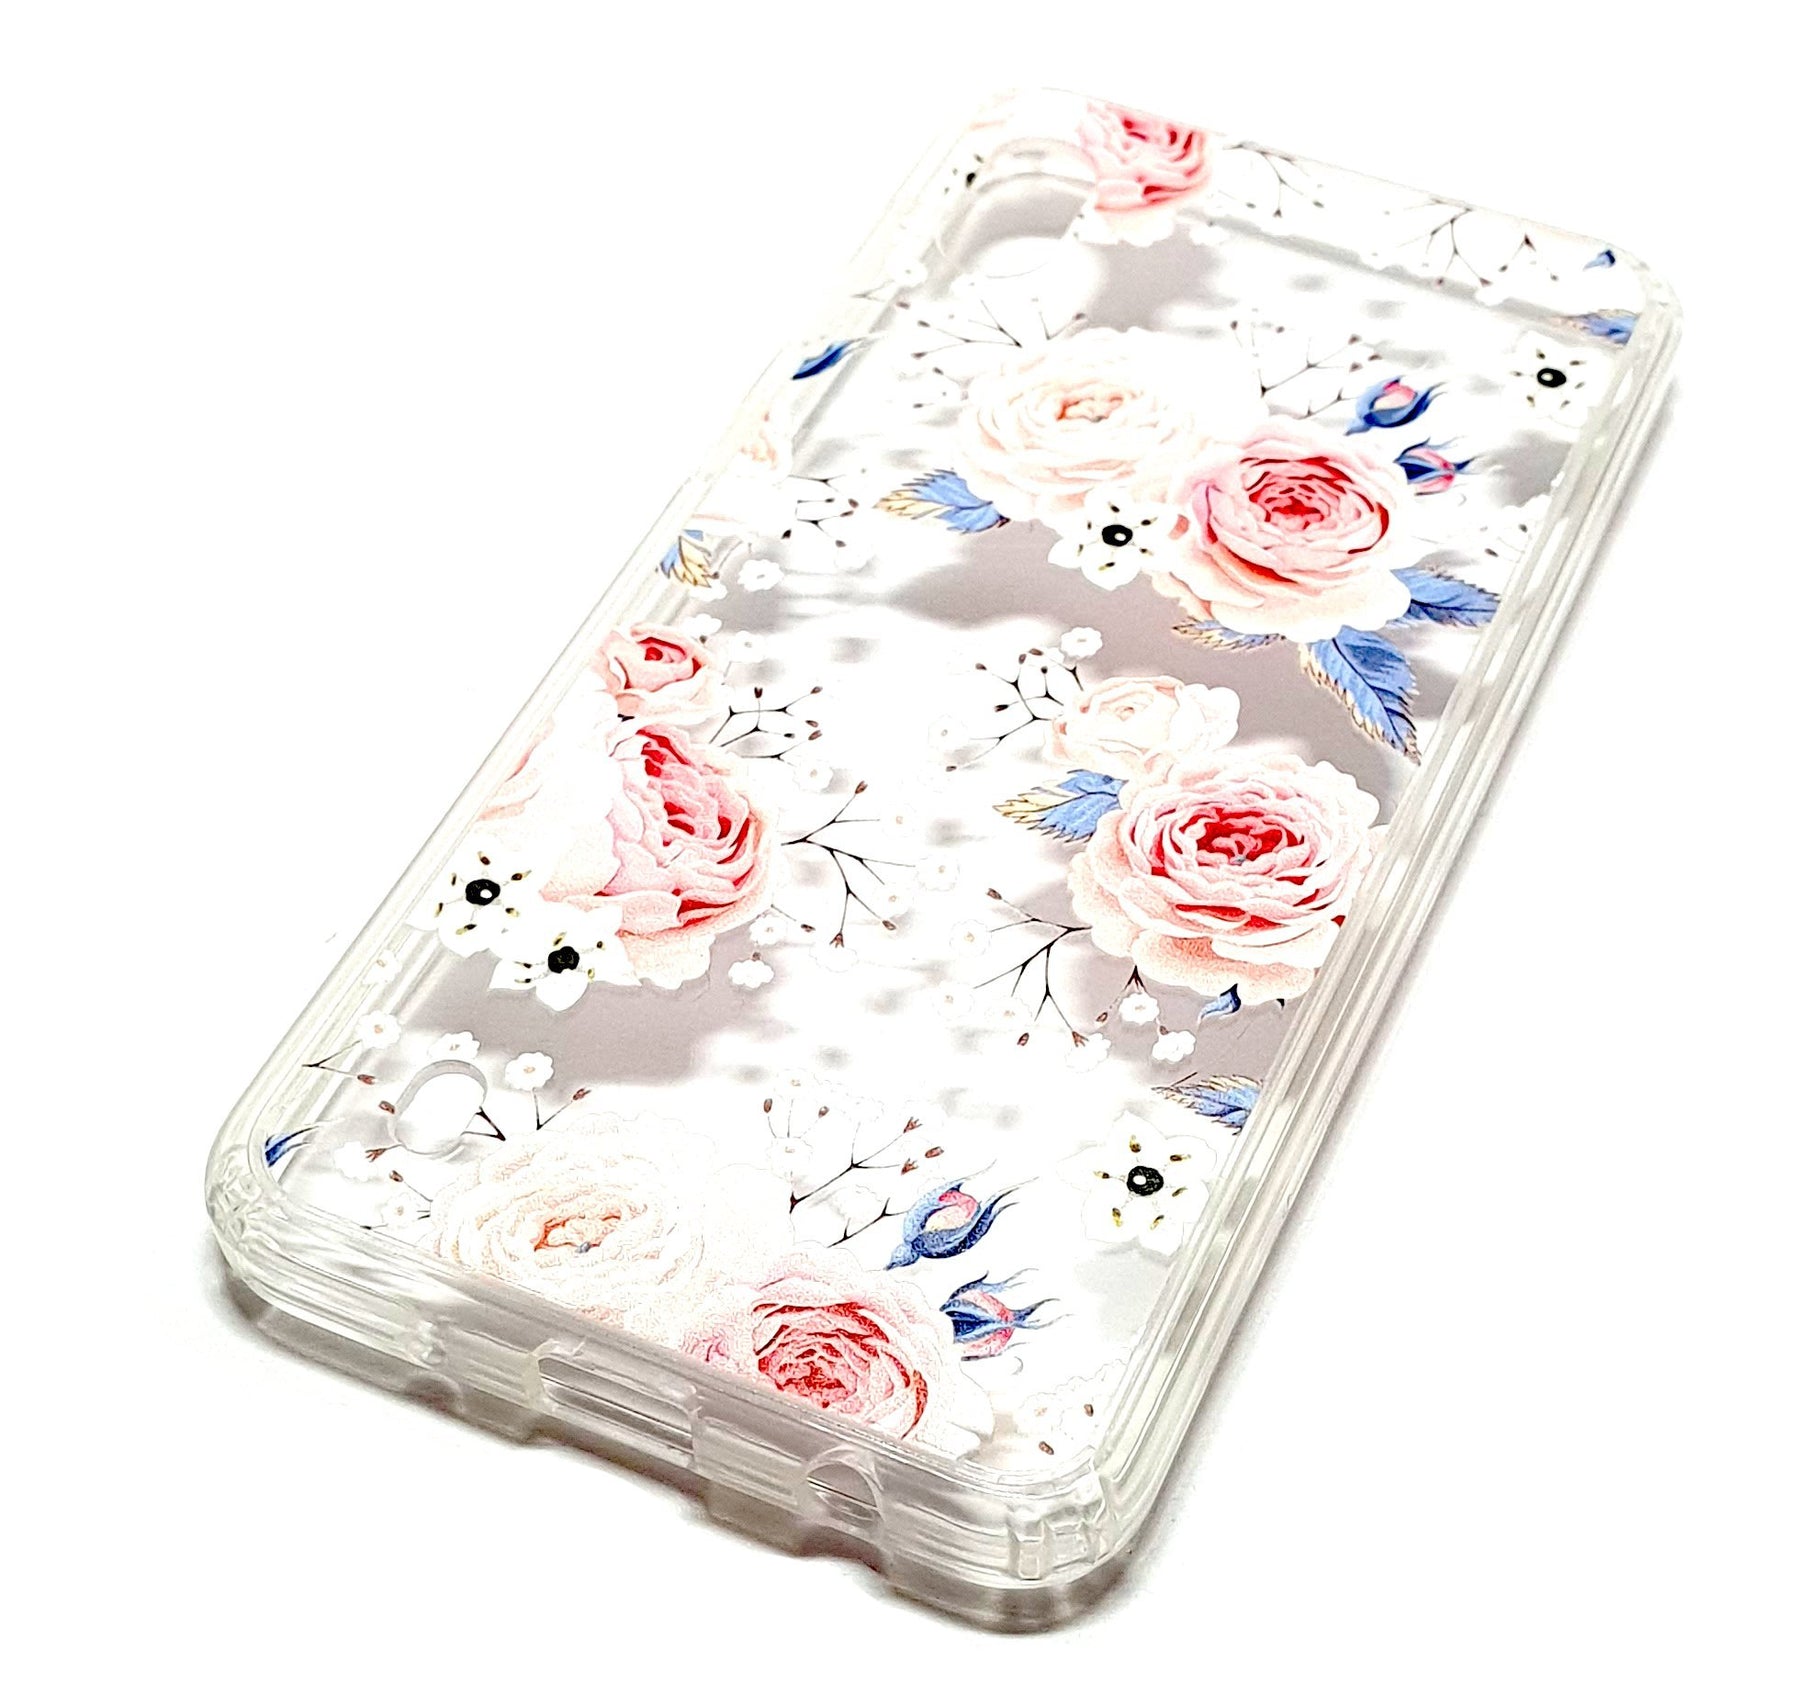 Samsung A10 decorative clear transparent phone case roses